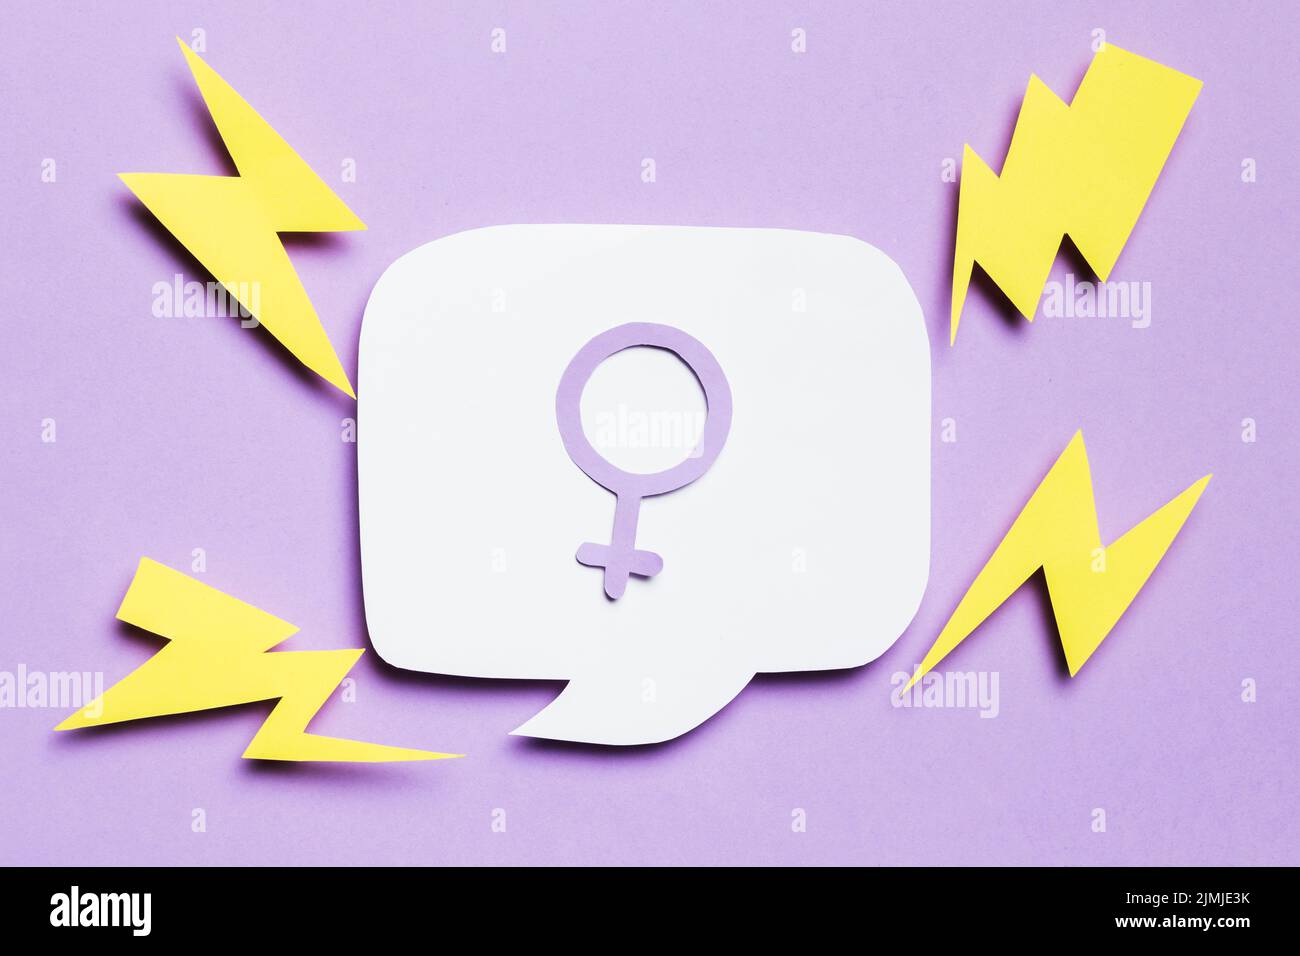 Feminine gender sign speech bubble surrounded by thunders Stock Photo